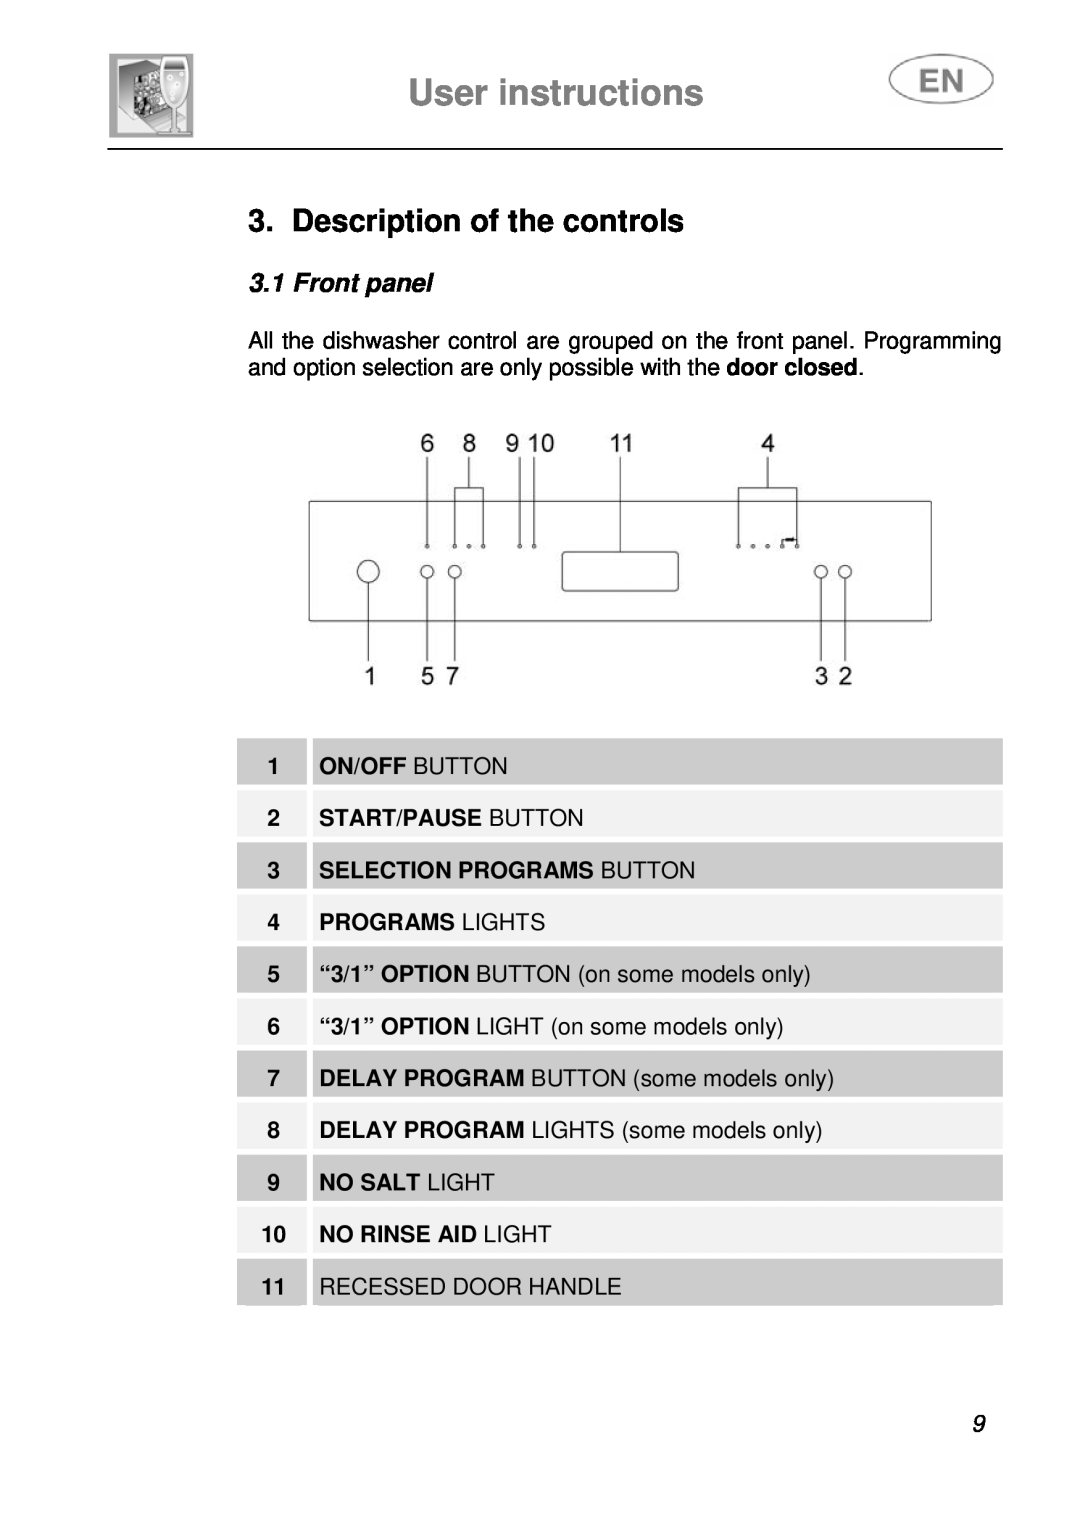 Smeg LVF649B User instructions, Description of the controls, Front panel, 1 ON/OFF BUTTON 2 START/PAUSE BUTTON 